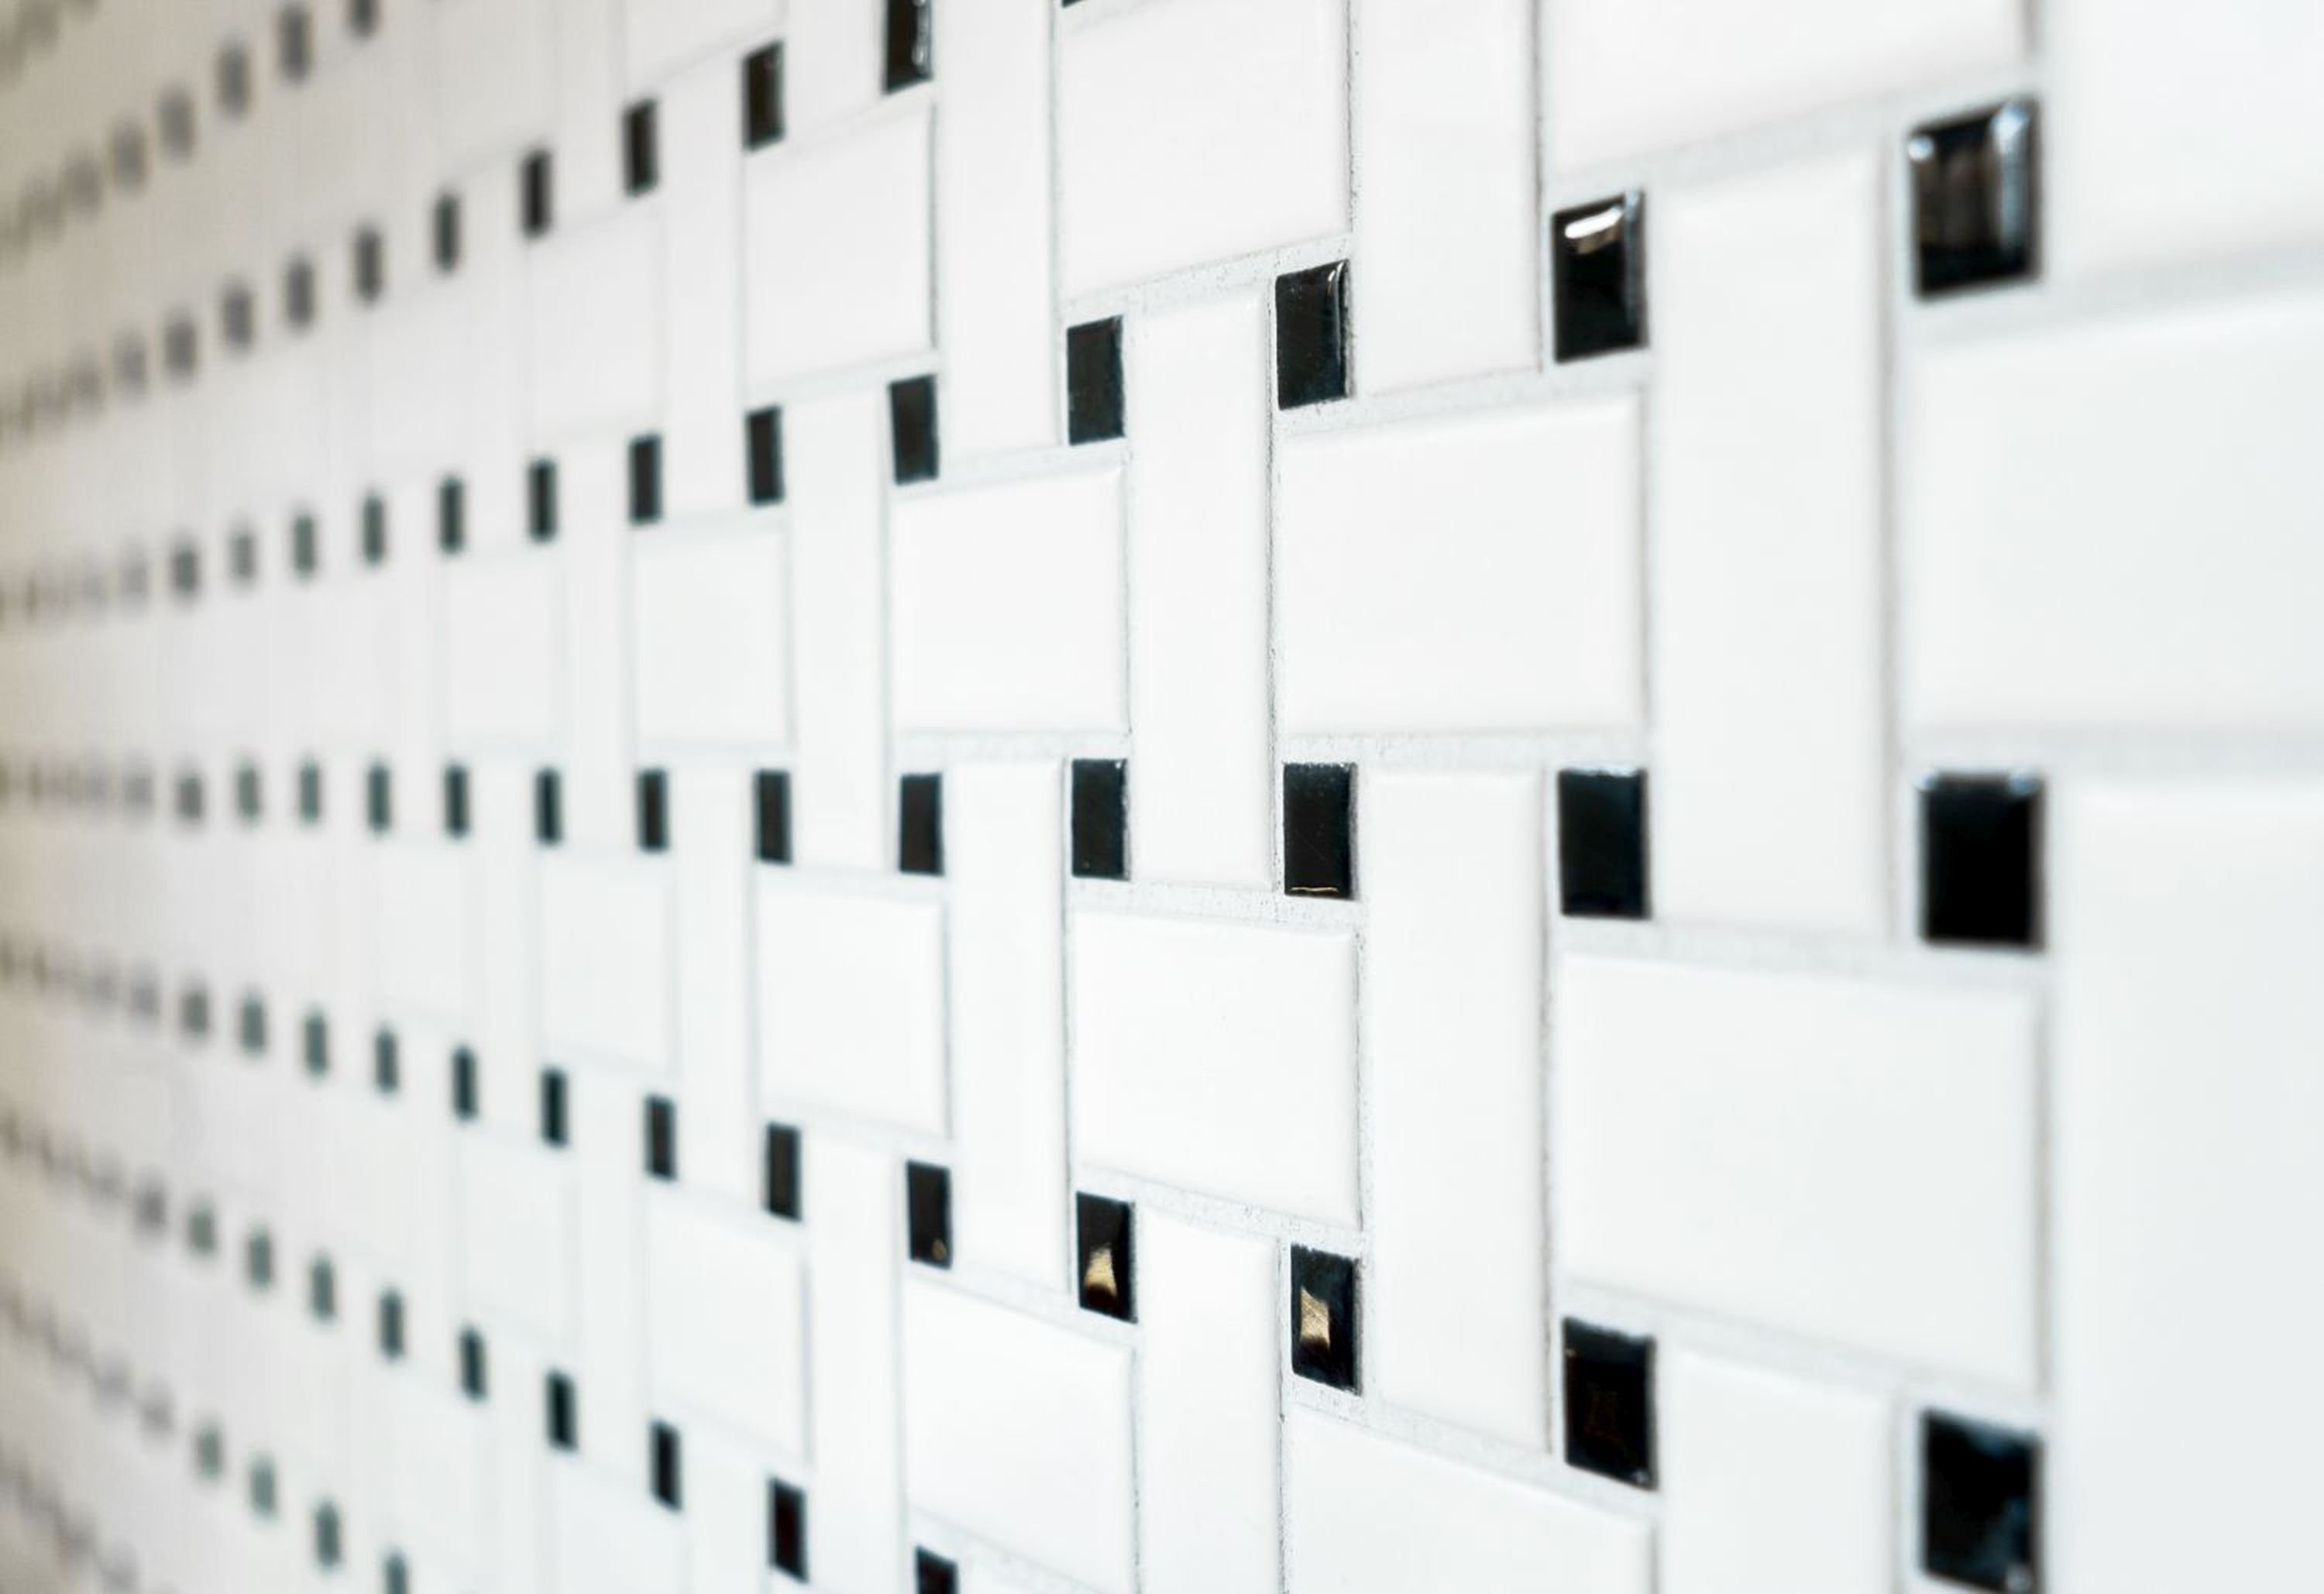 Mosani Mosaikfliesen Basket Bad Wand matt Mosaik Fliese Keramik schwarz WC weiß